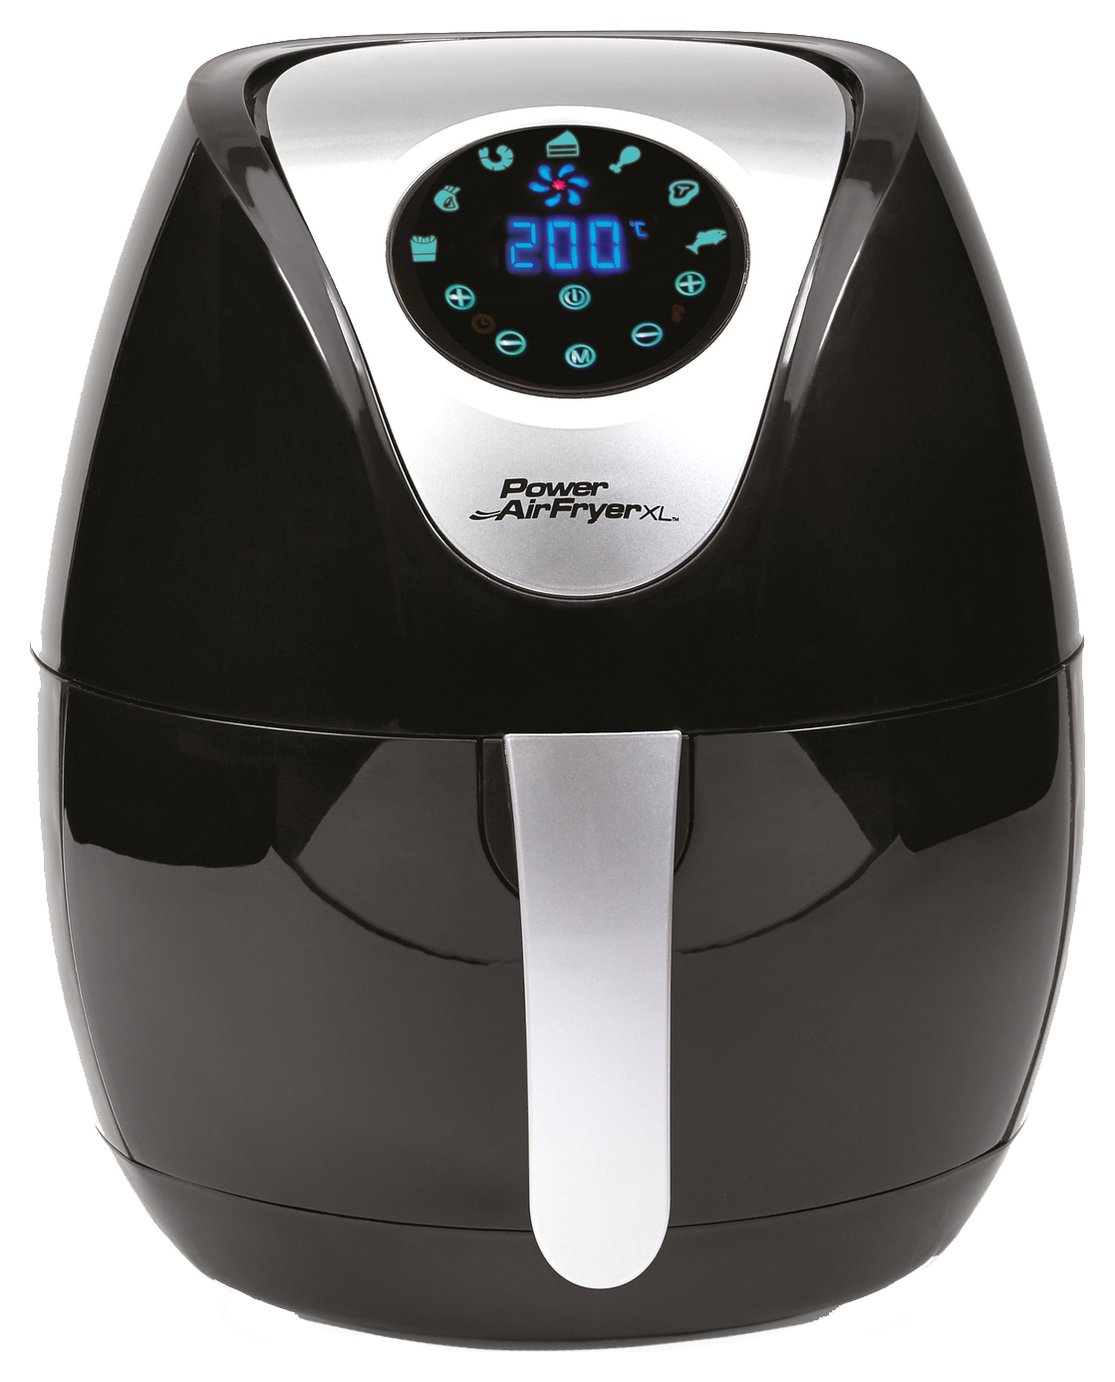 Power Air Fryer 3.2 Litre Digital – Black 